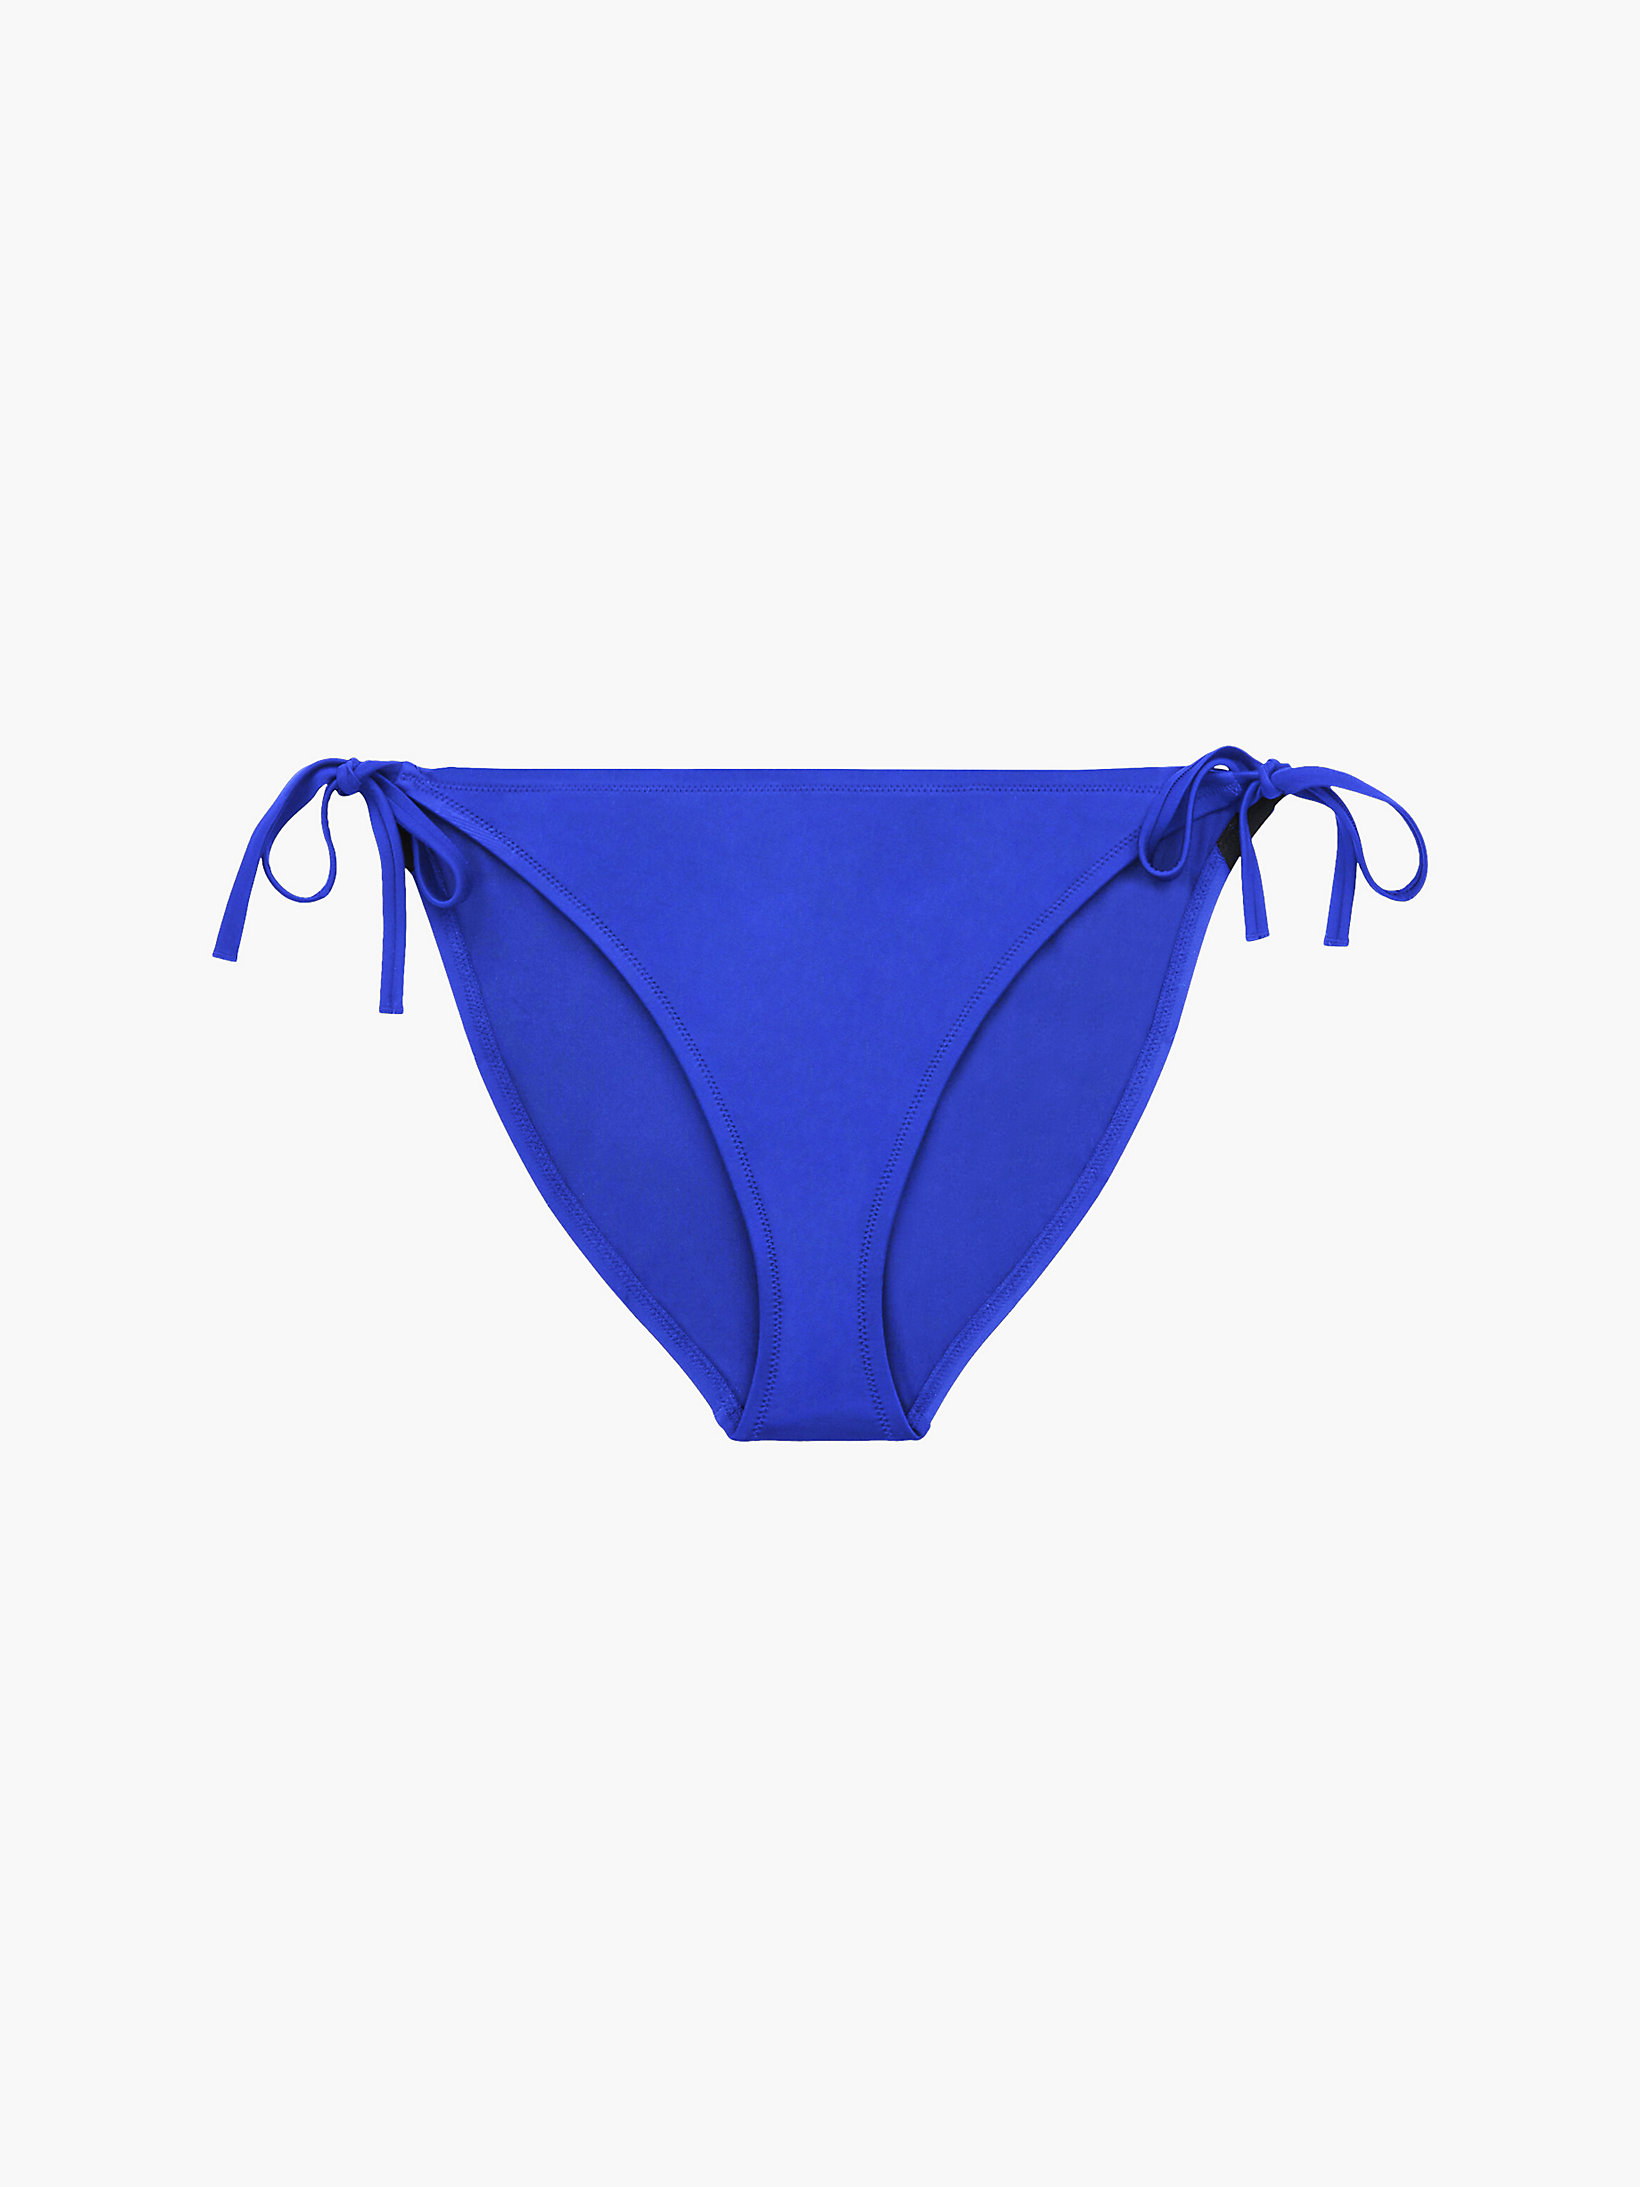 Wild Bluebell Plus Size Bikini Bottom - Intense Power undefined women Calvin Klein